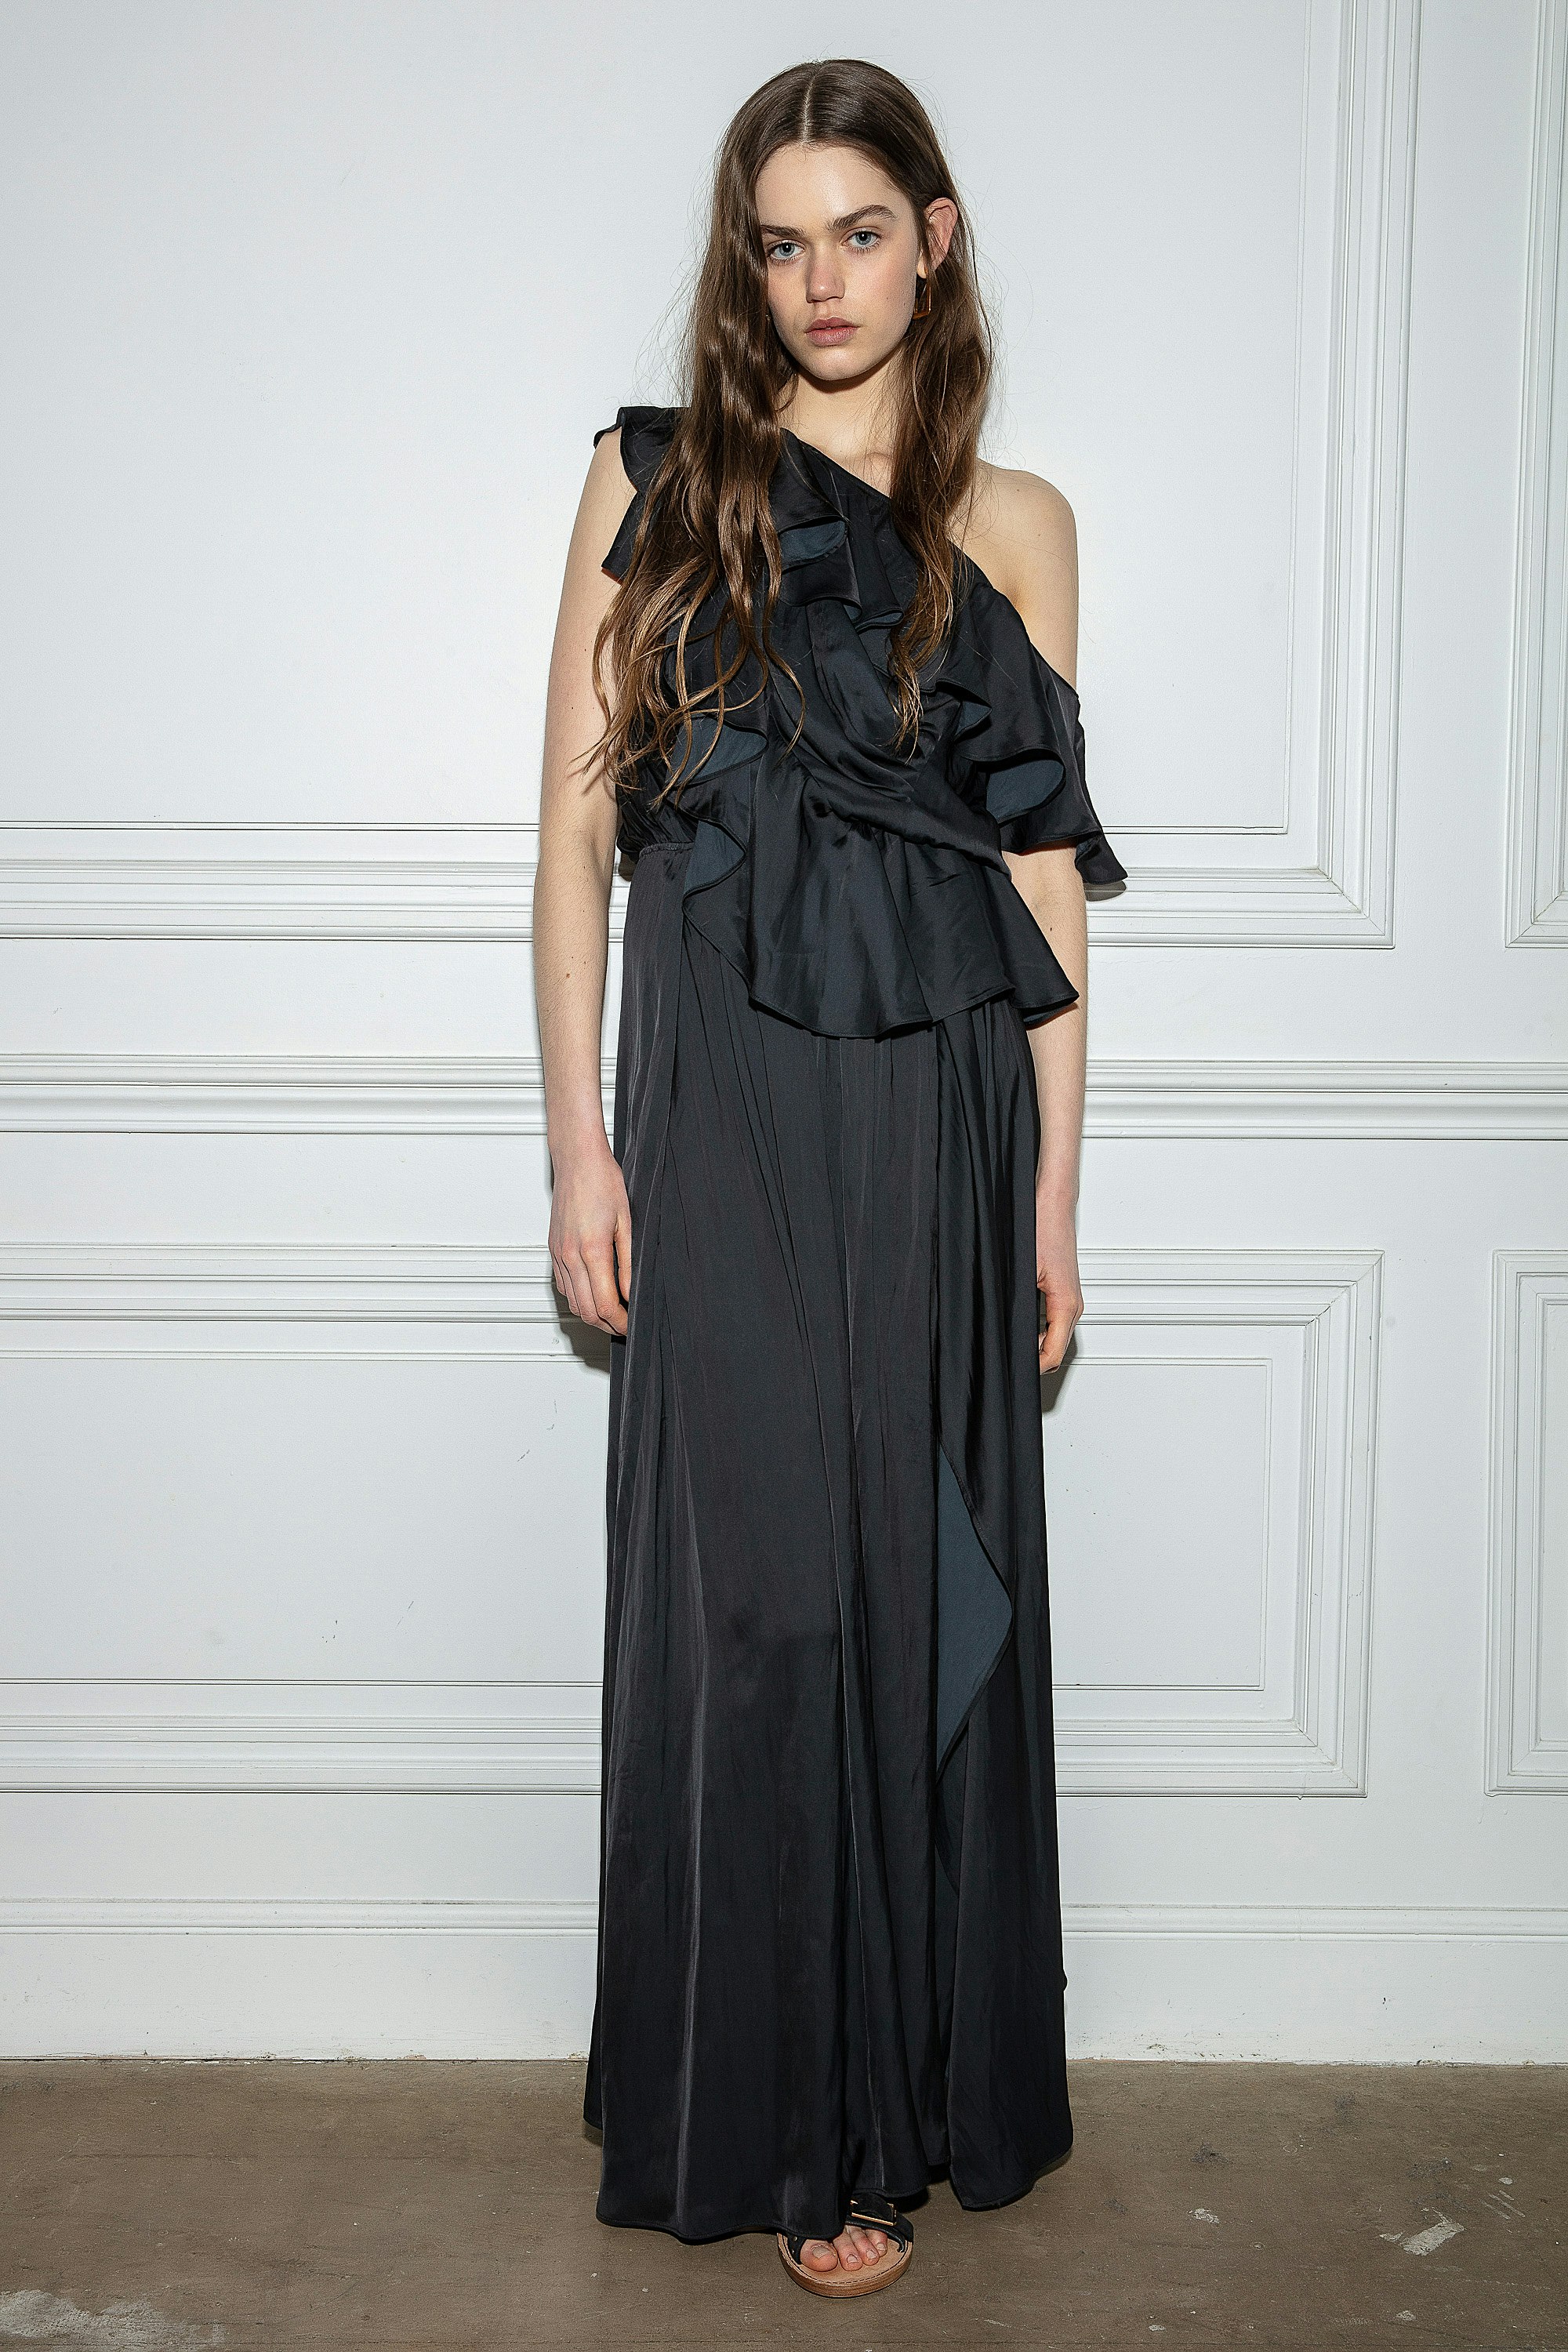 Ryu Satin Dress - Women's long black satin dress, draped and asymmetrical